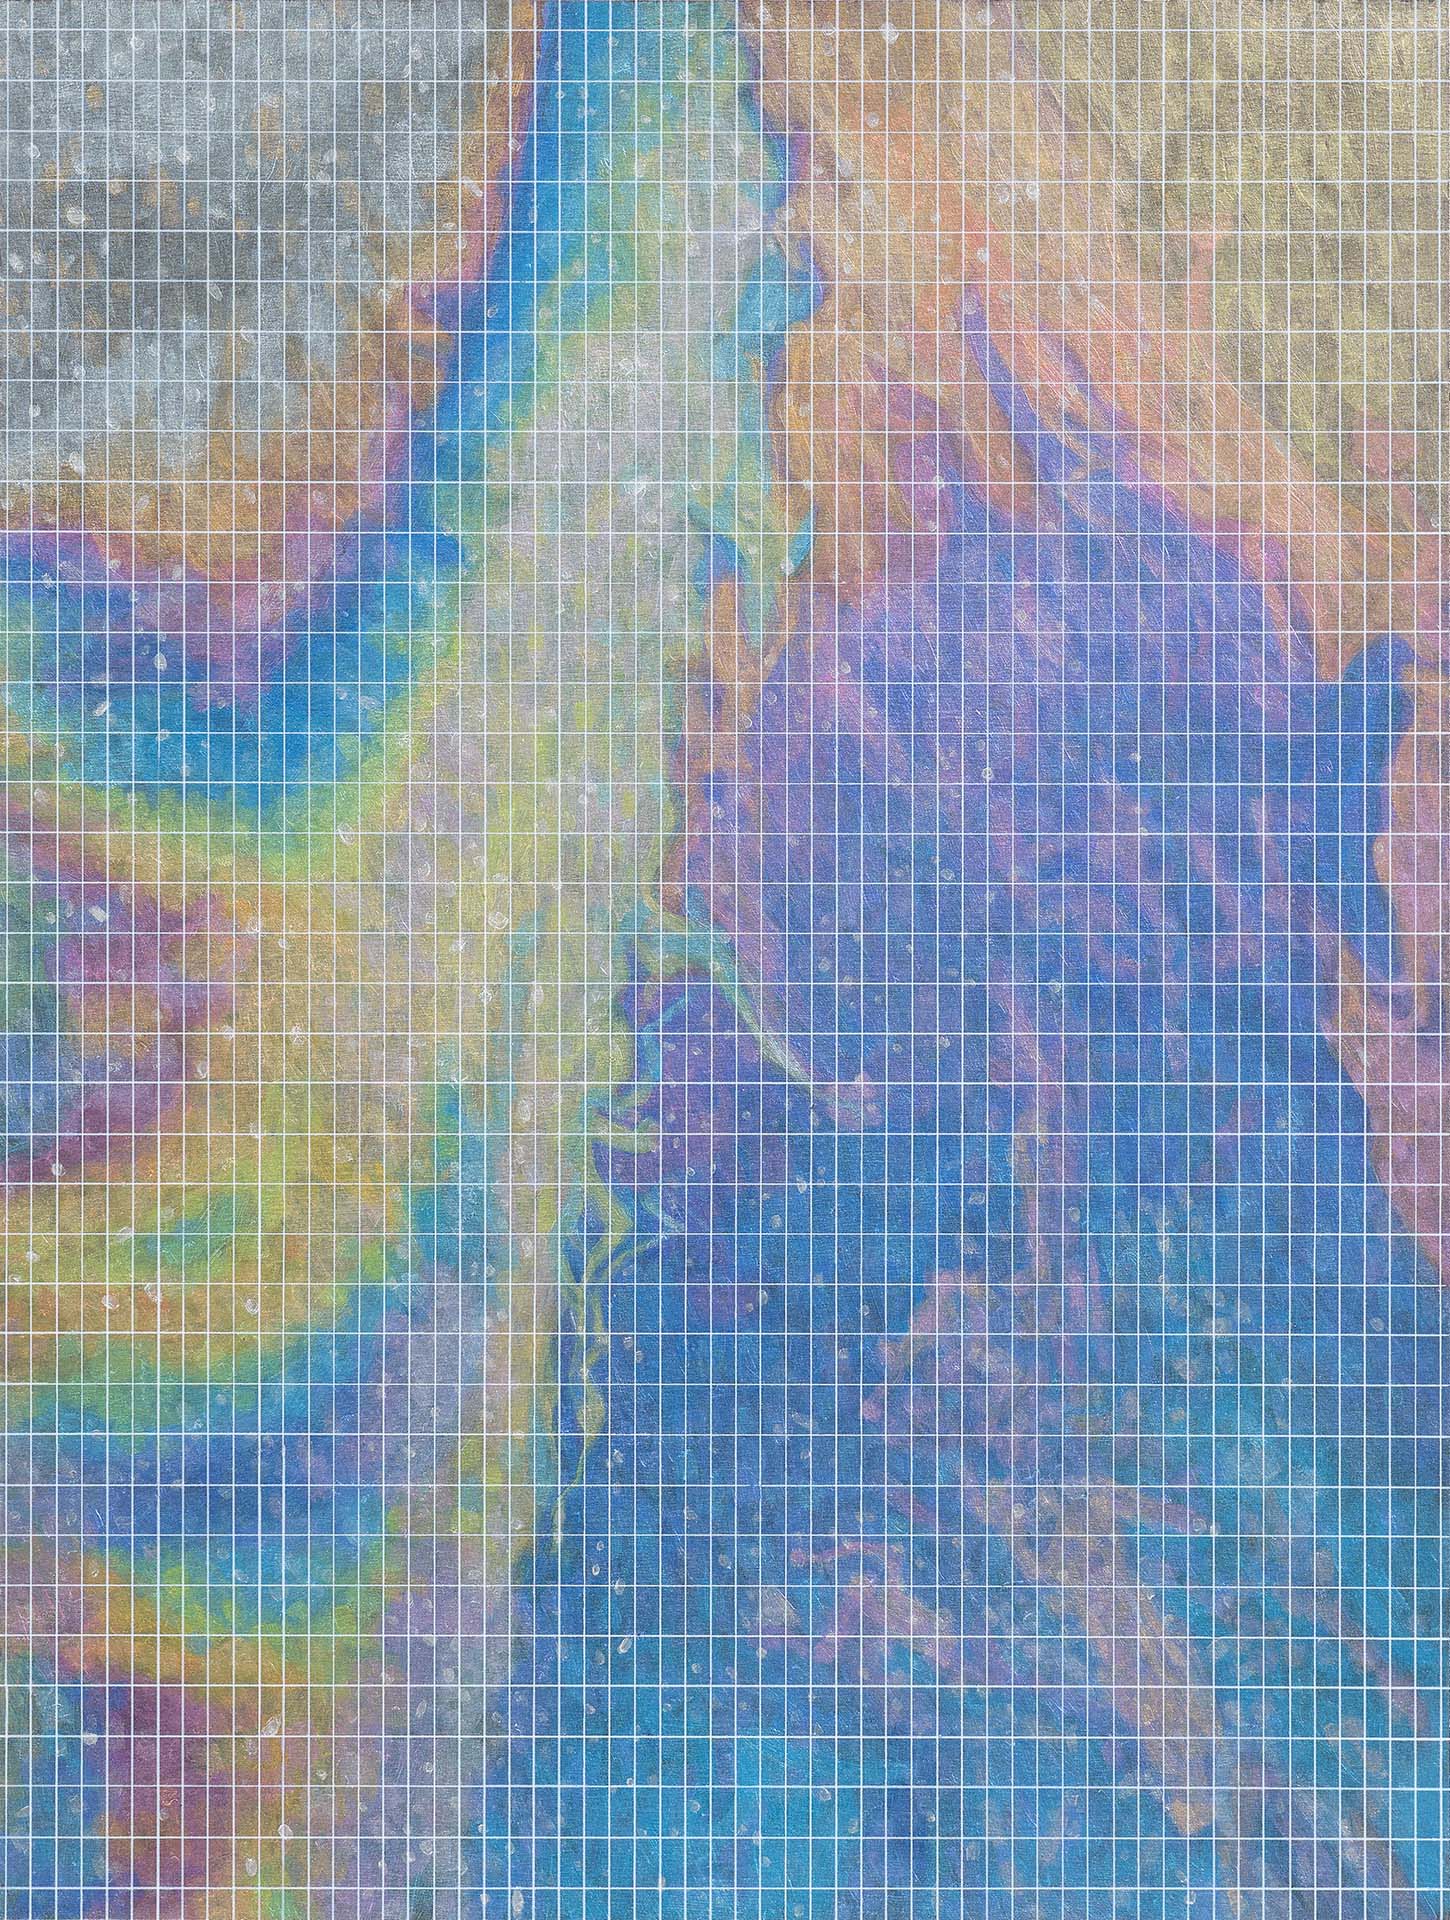 Oil Slick with Grid, 2020, acrylic on bristol board, 383 x 285mm. Photo: Sam Hartnett